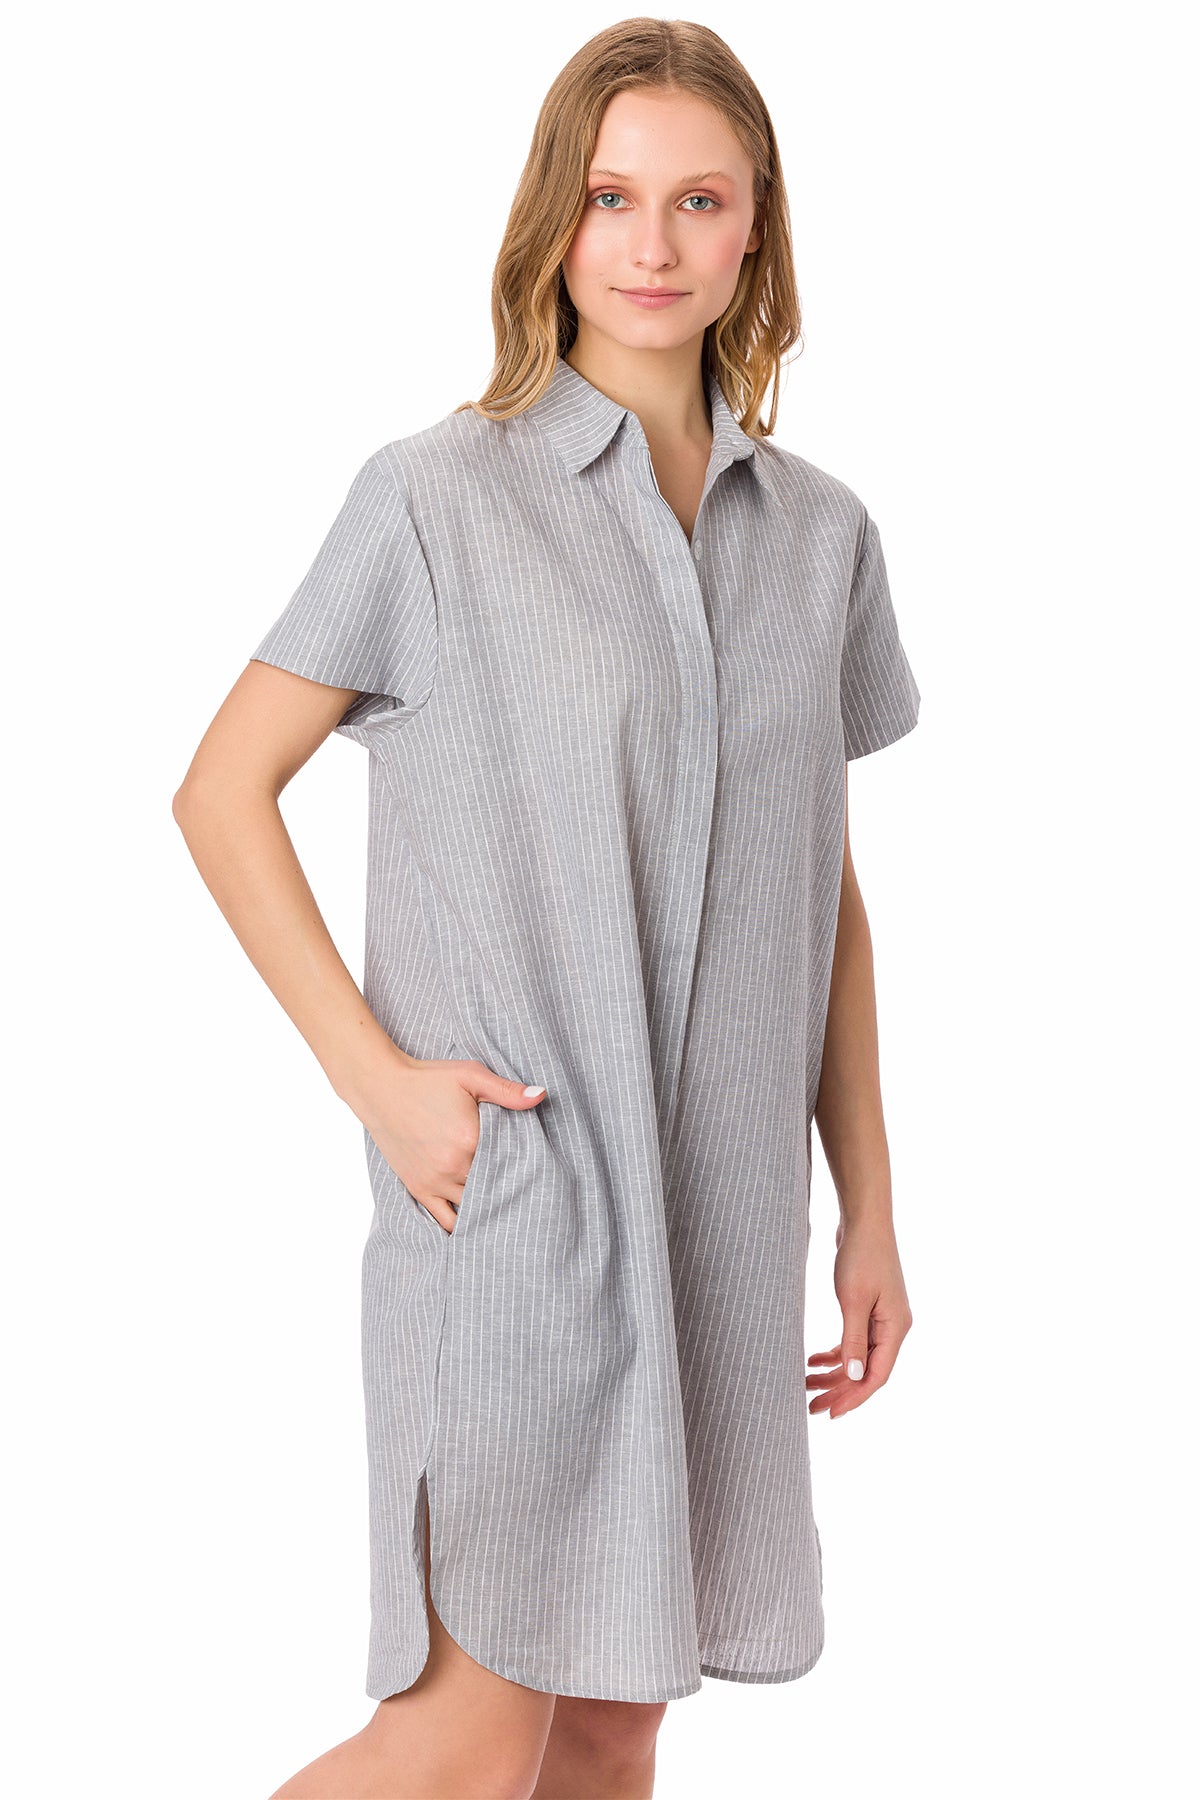 Suvi NYC Women's Striped Boyfriend Dress Button-Up Dress Tunic Style Side Pockets